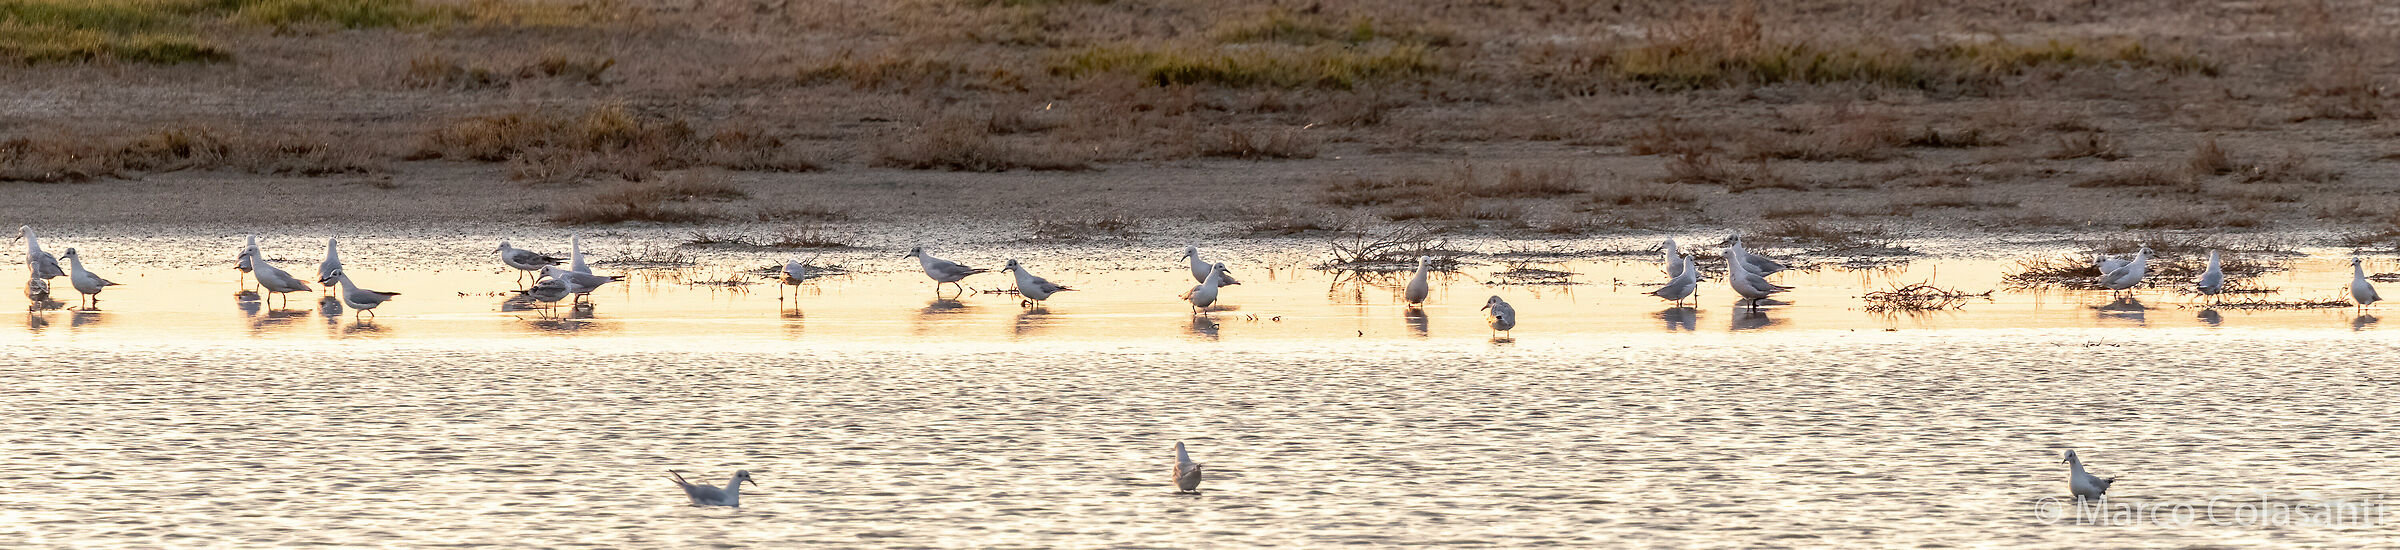 Seagulls at dawn...